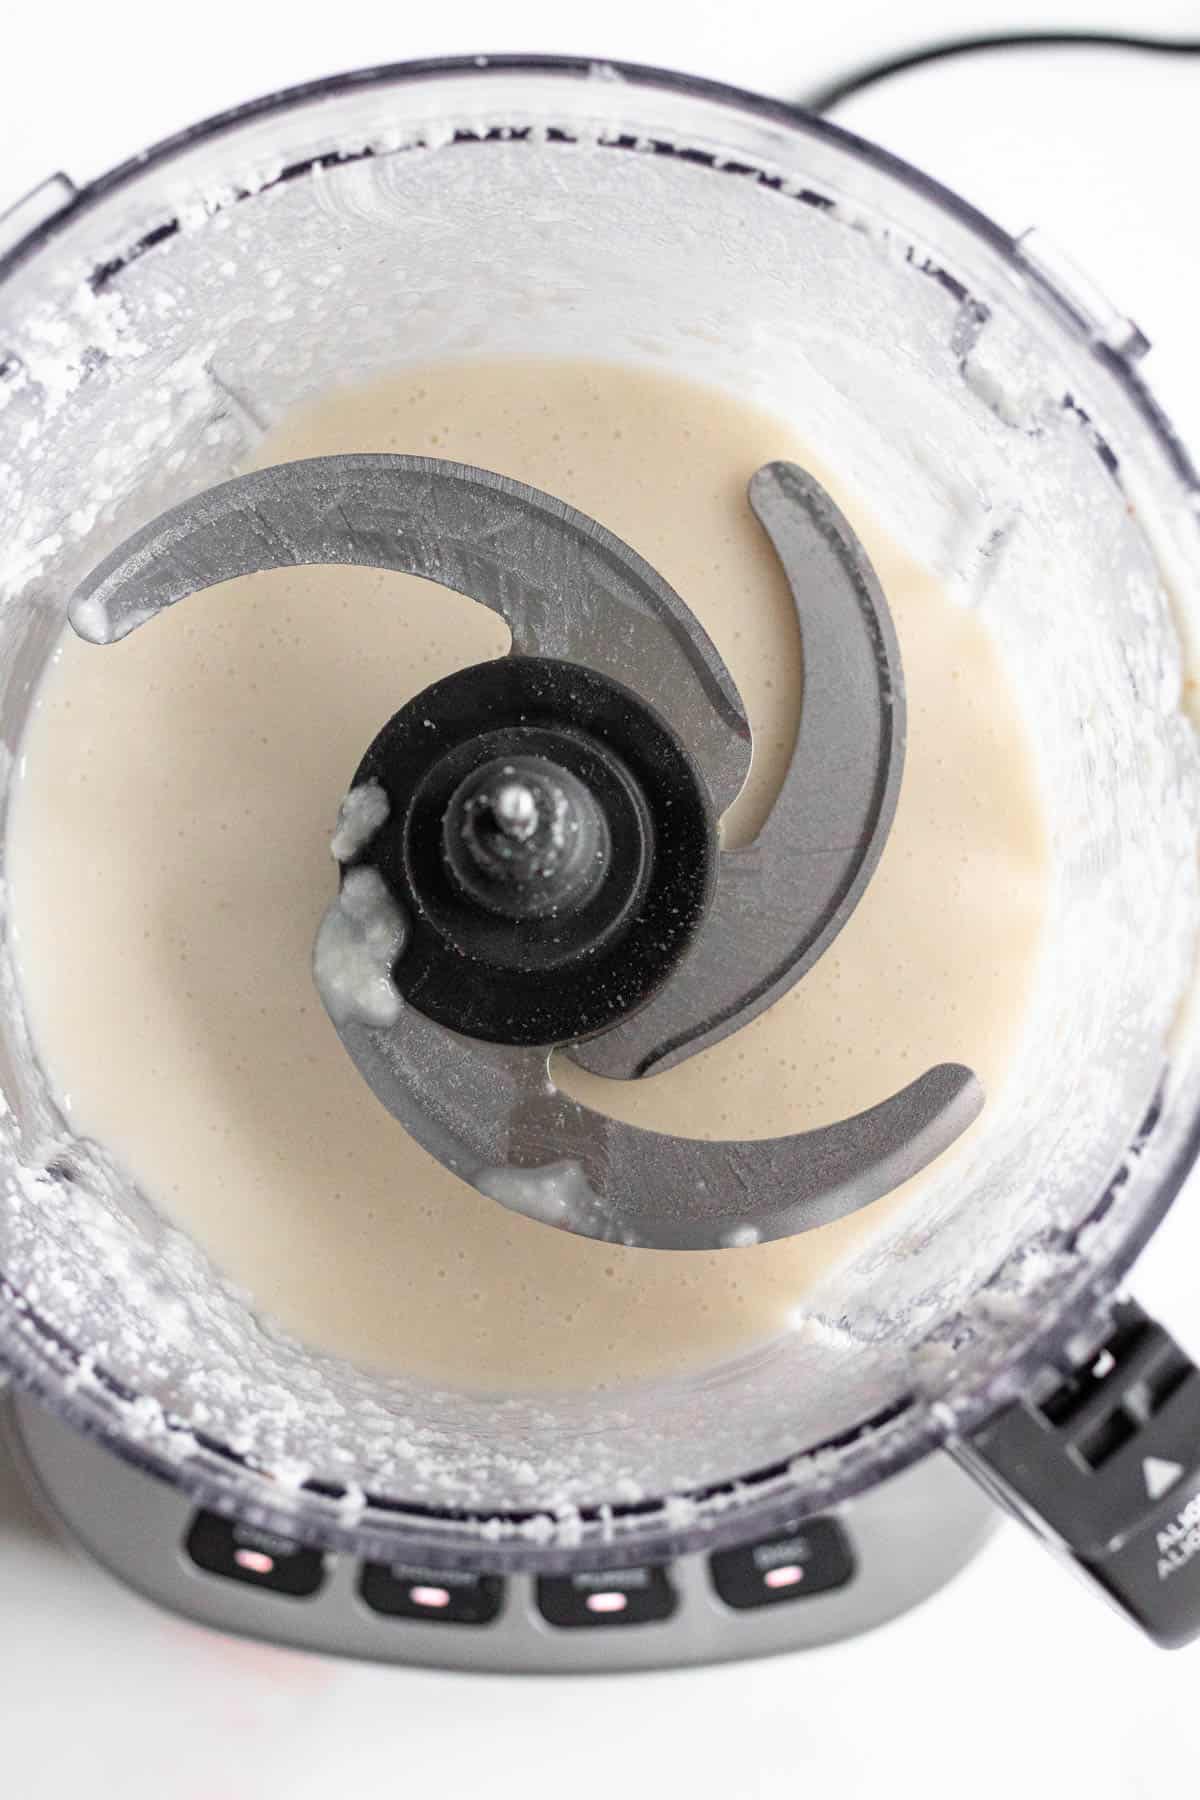 shredded coconut in a food processor forming a liquid 